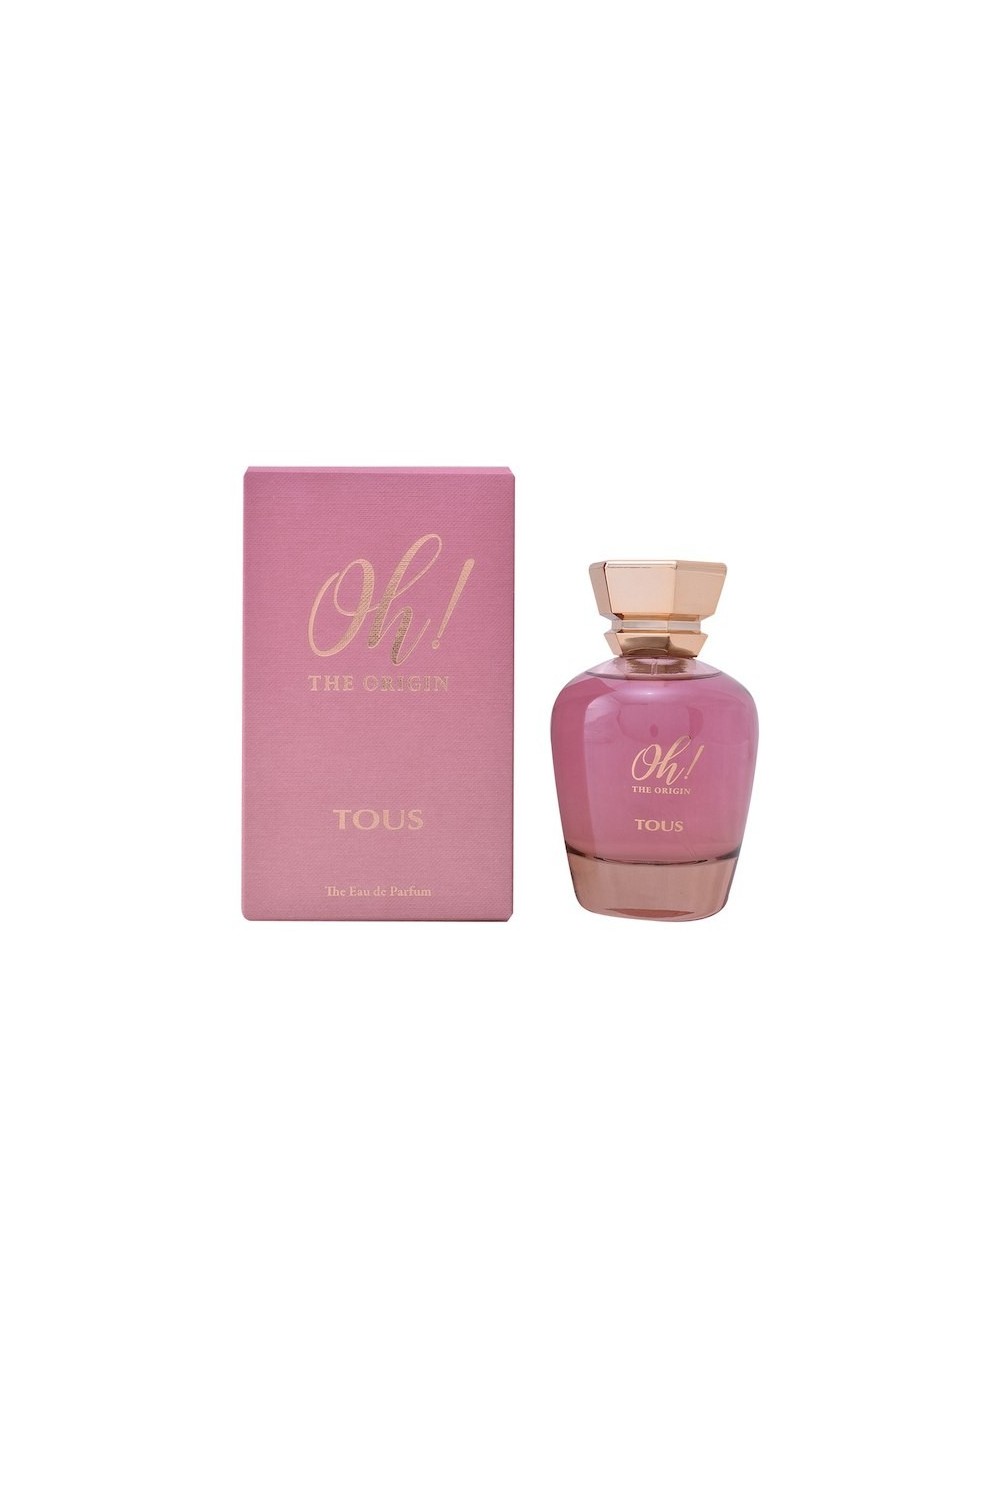 Tous Oh! The Origin Eau De Perfume Spray 100ml